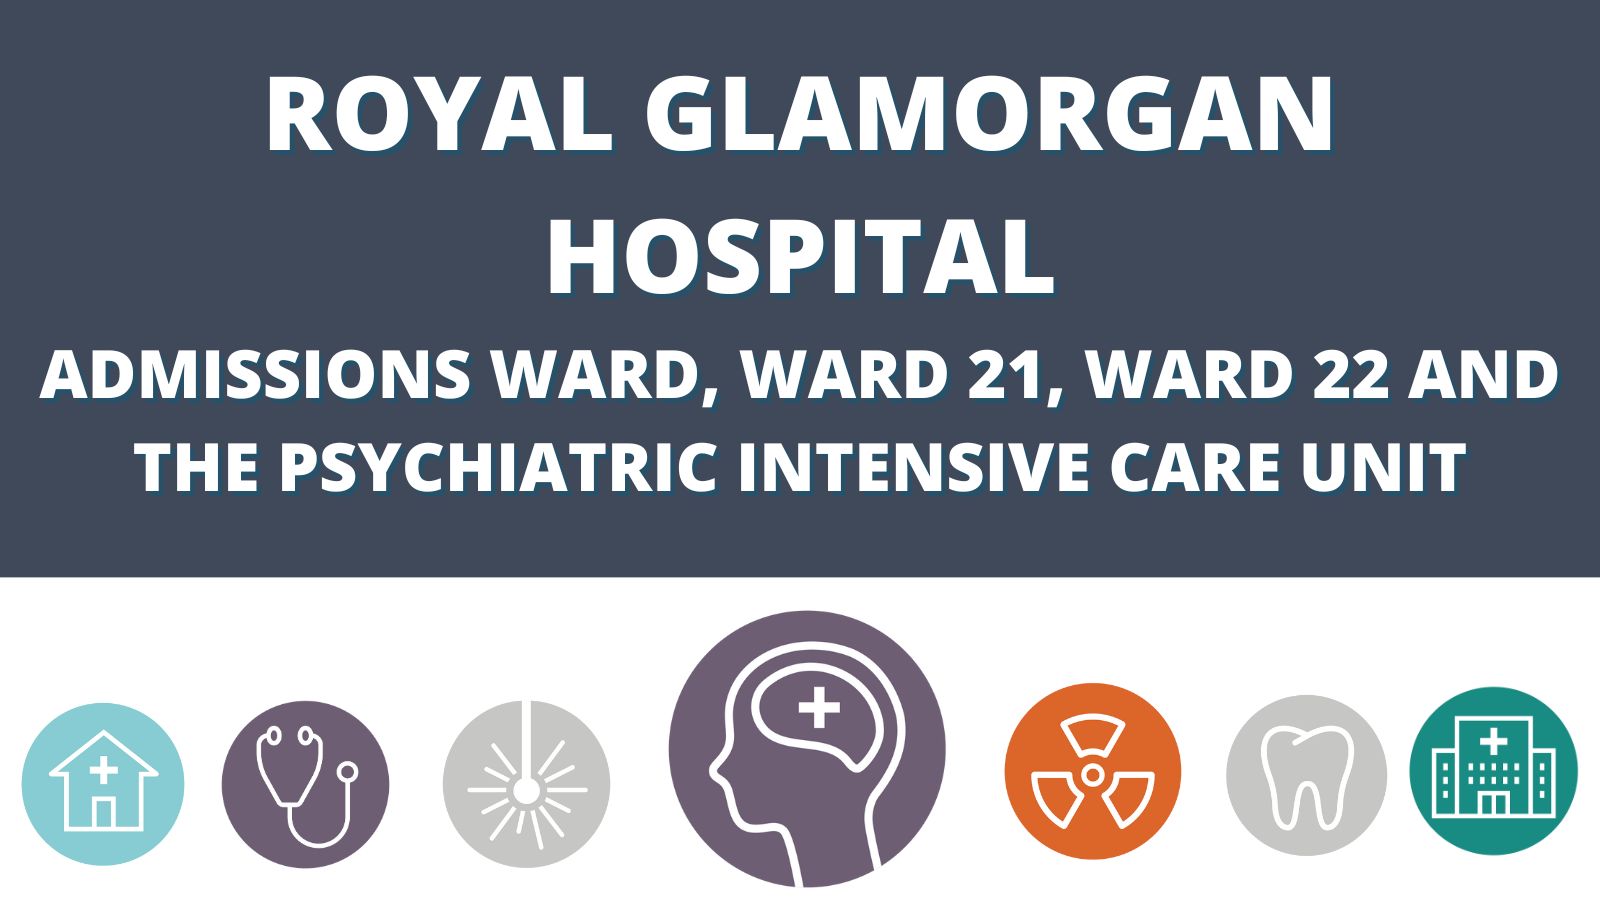 Royal Glamorgan Hospital  Admissions Ward, Ward 21, Ward 22 and the Psychiatric Intensive Care Unit 